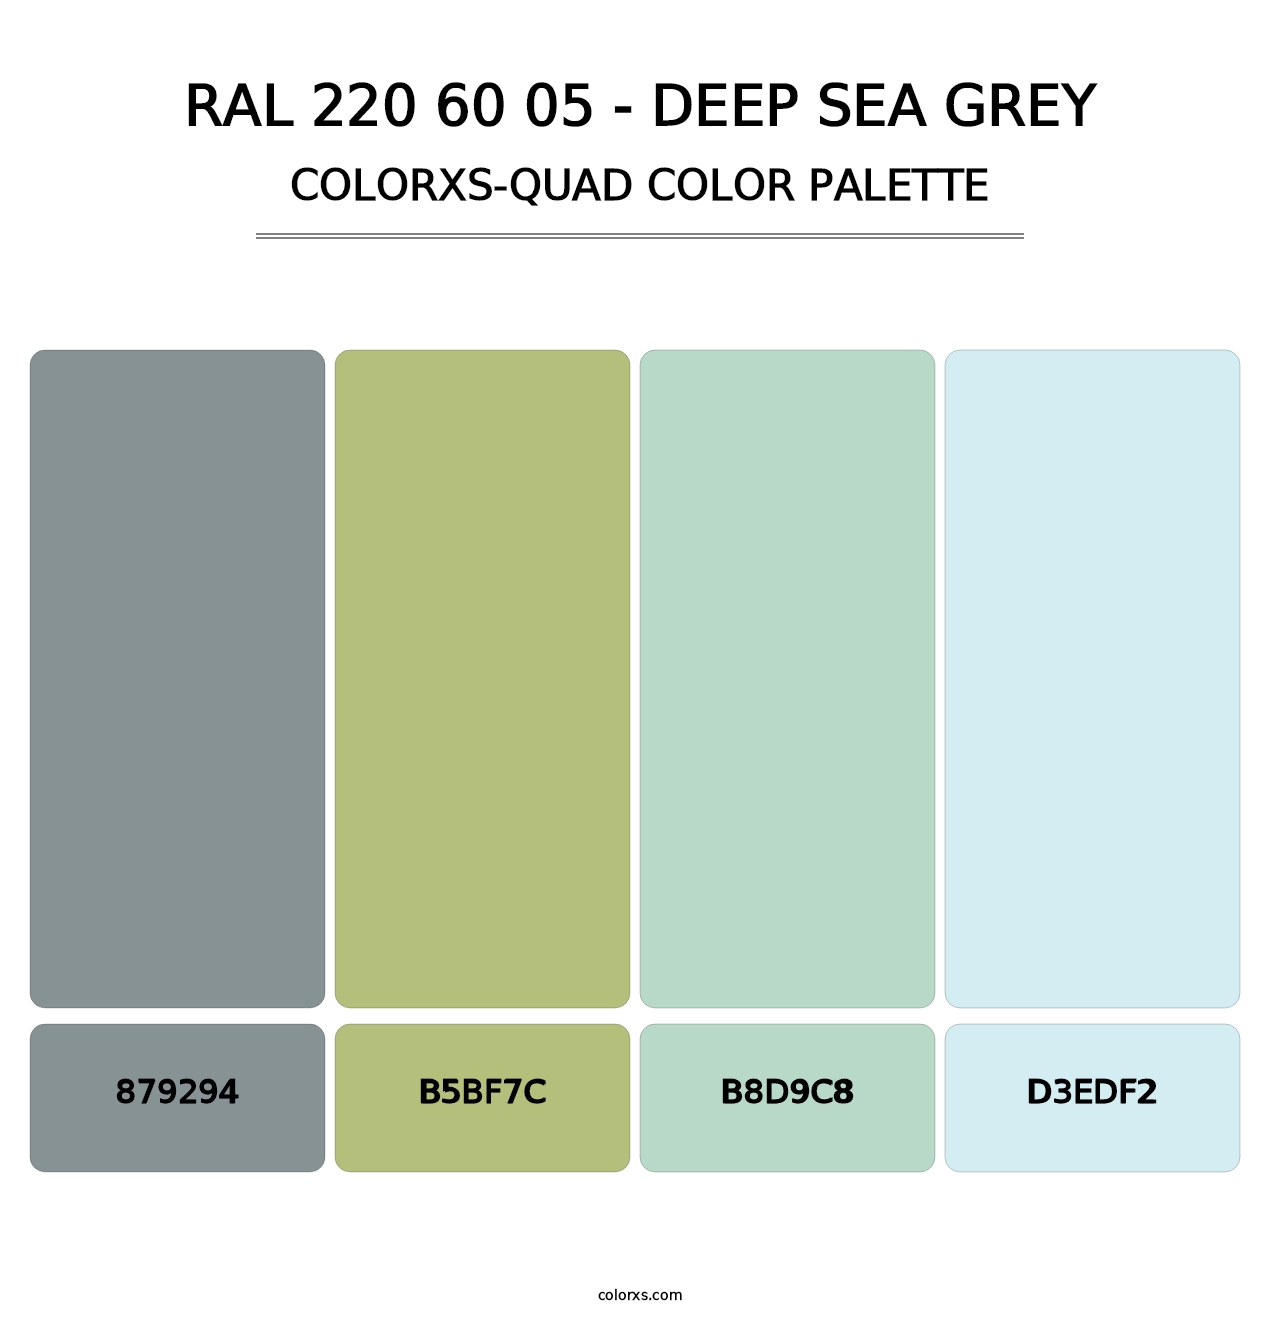 RAL 220 60 05 - Deep Sea Grey - Colorxs Quad Palette